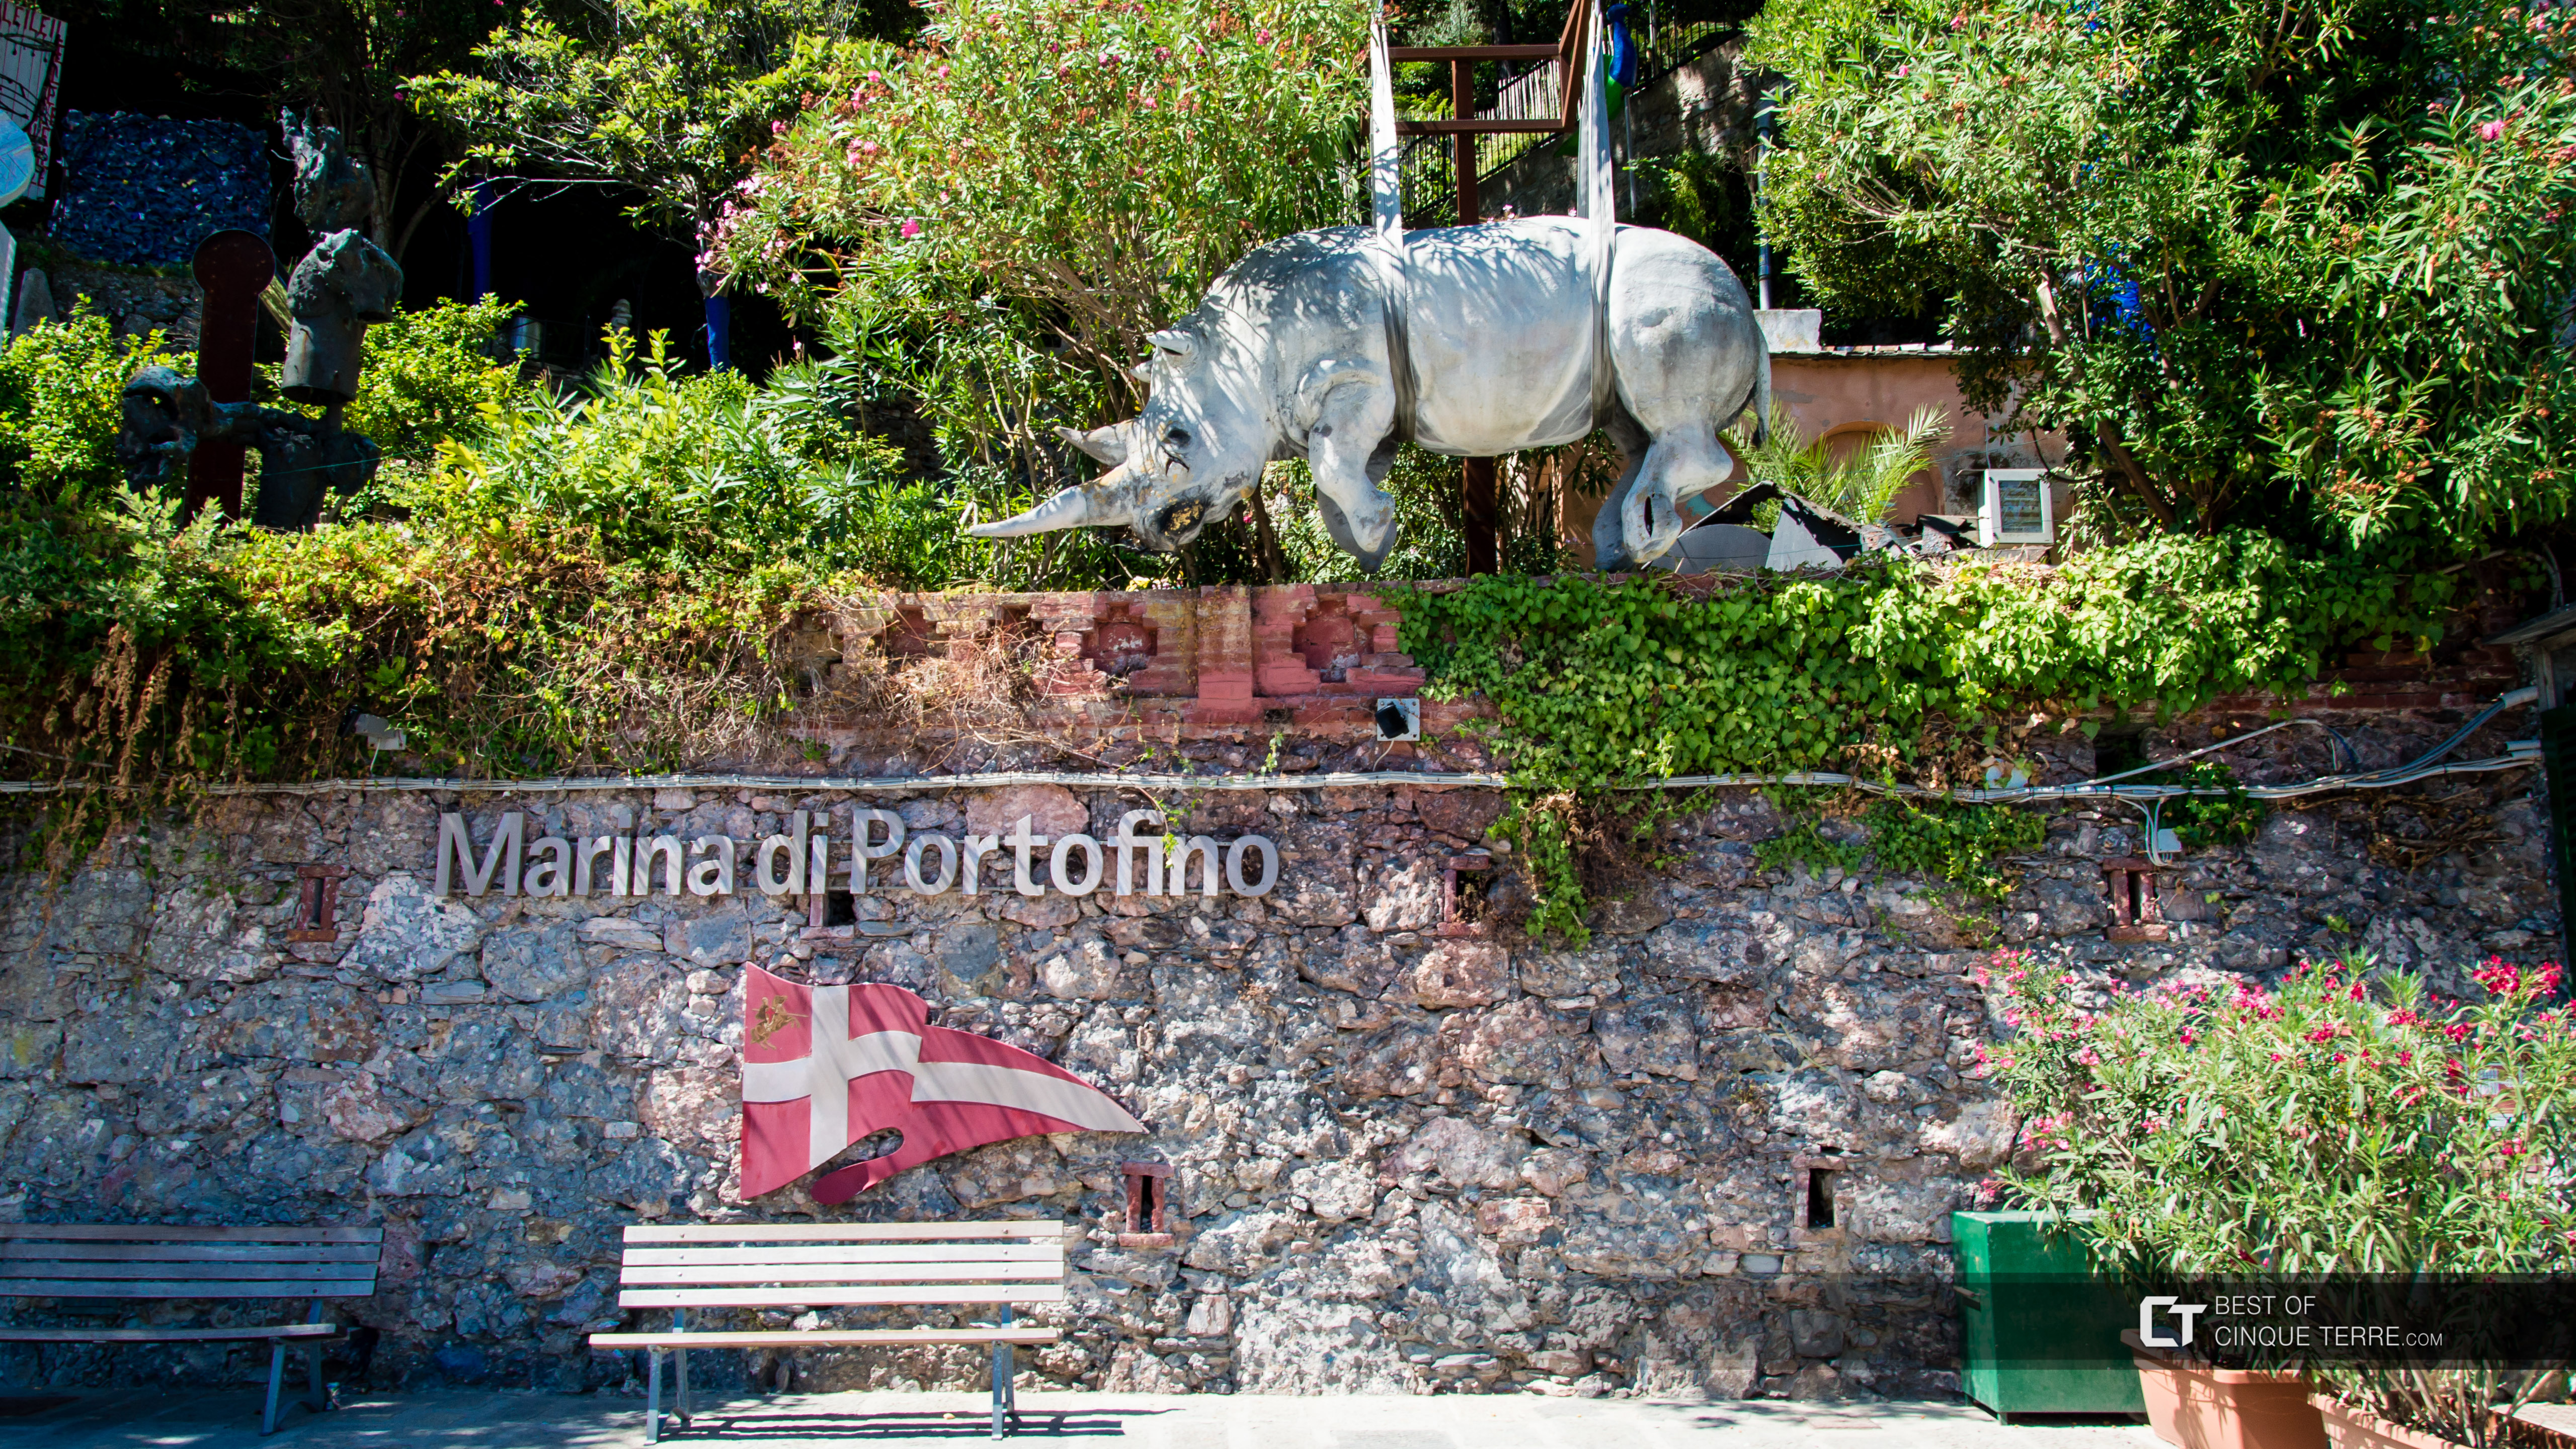 Statue of the rhinoceros, symbol of the town, Portofino, Italy